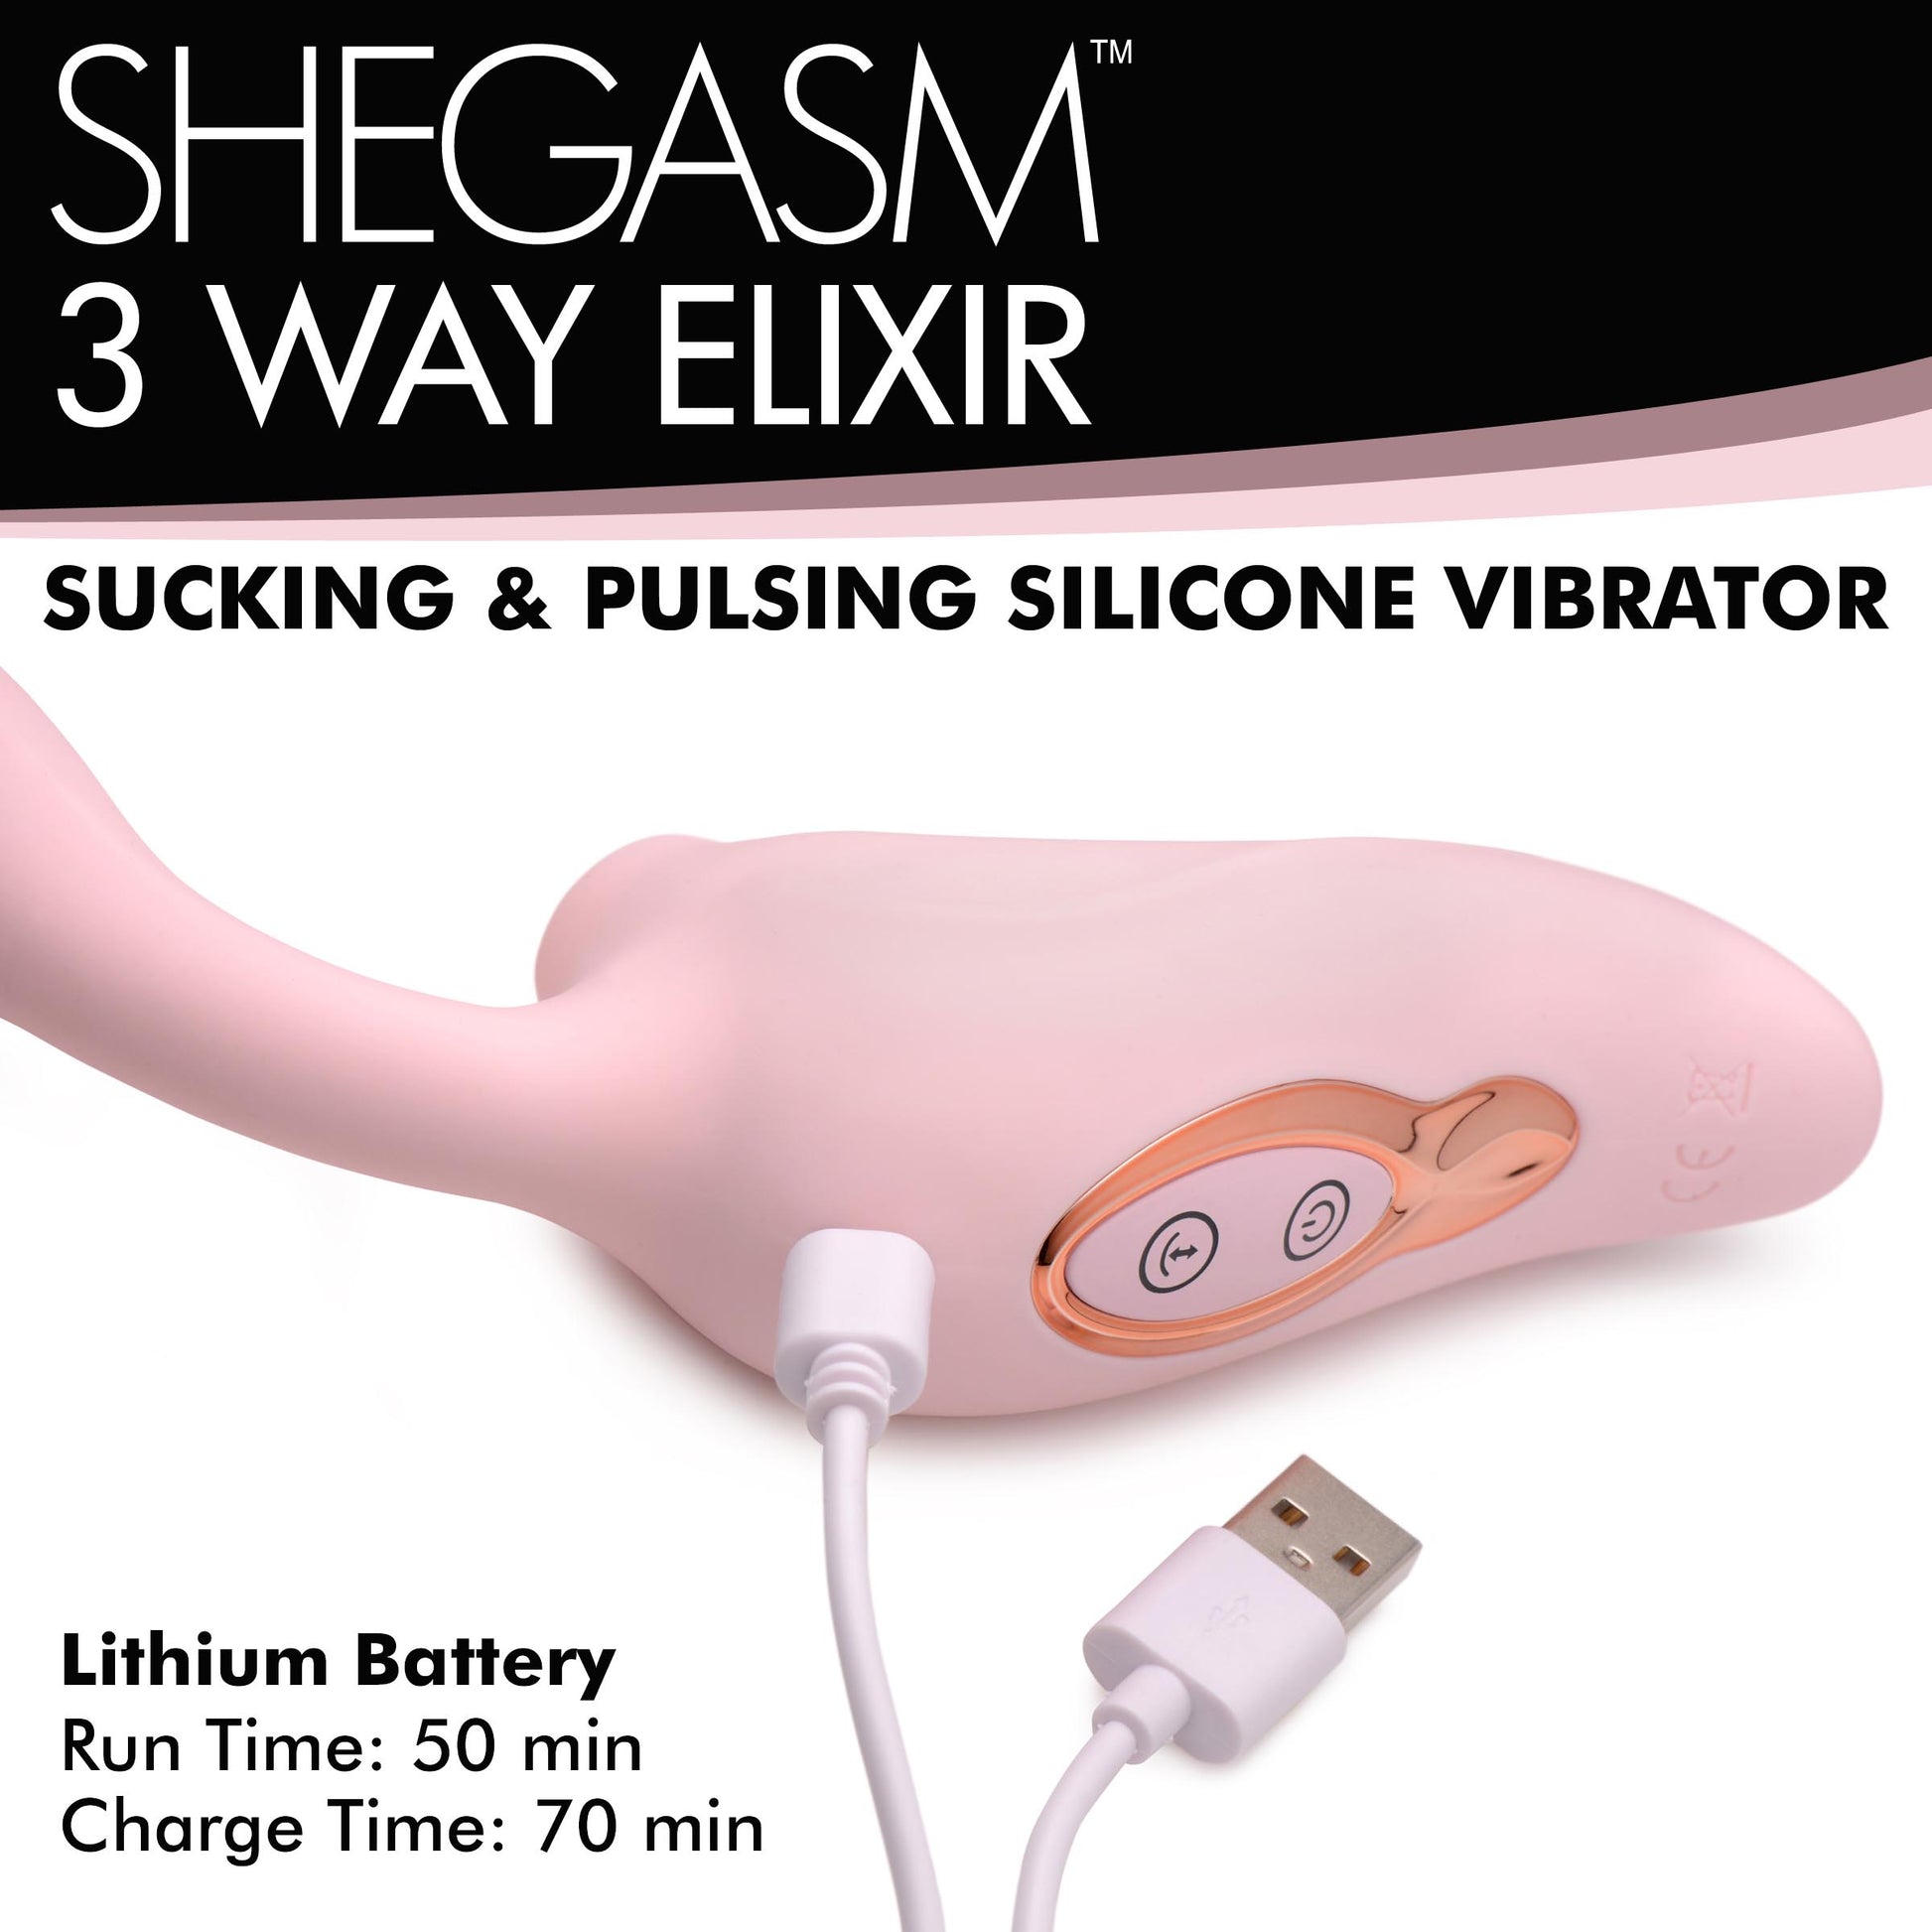 3 Way Elixir Sucking and Pulsing Vibrator - UABDSM